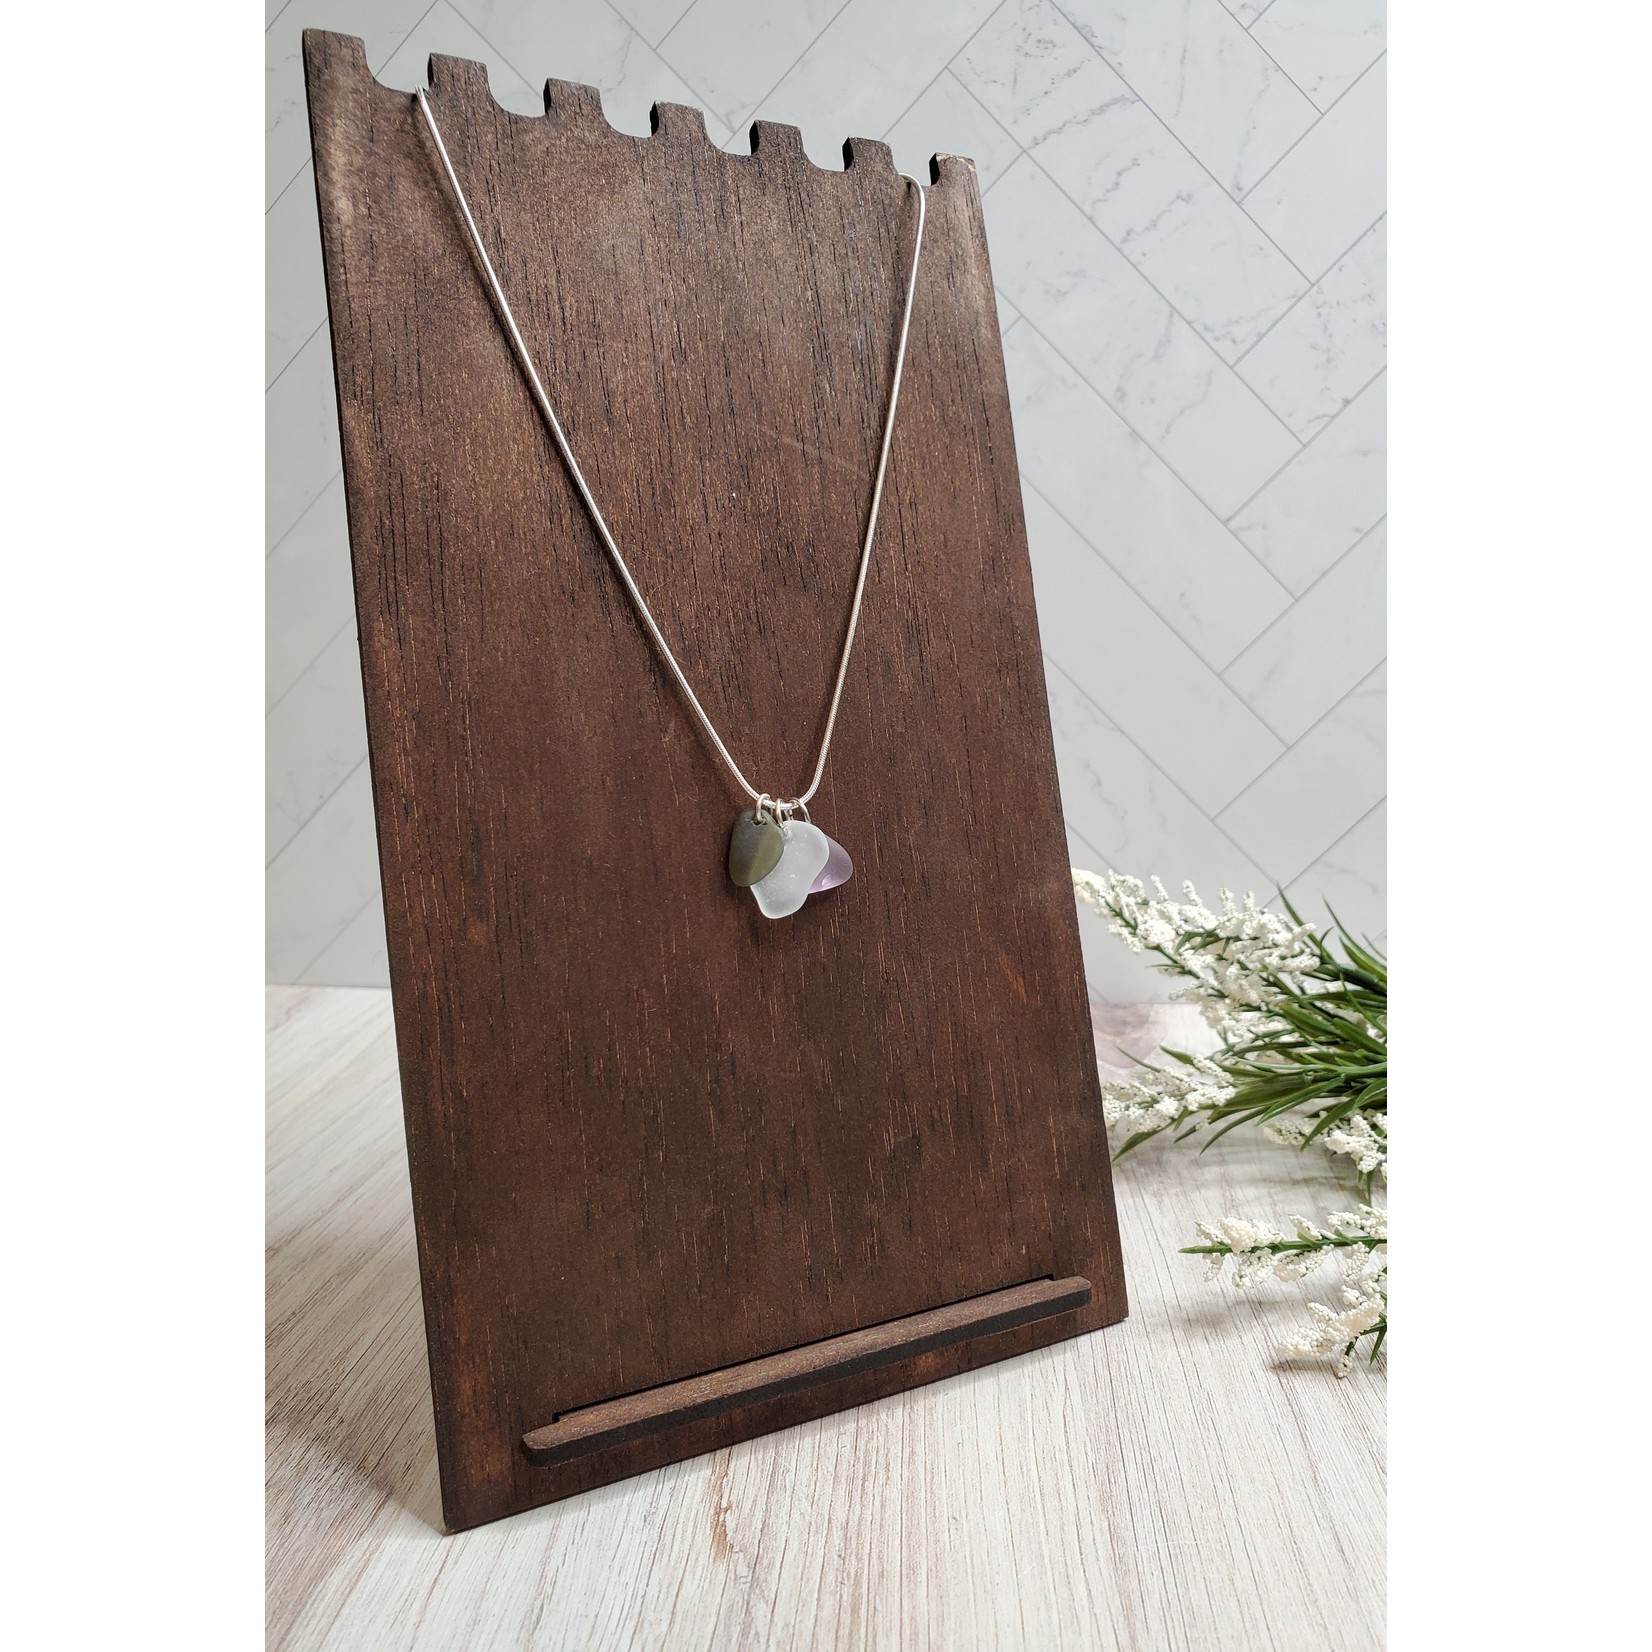 Lorna Tirman Recycled Glass Necklace - Dark Green/White/Purple